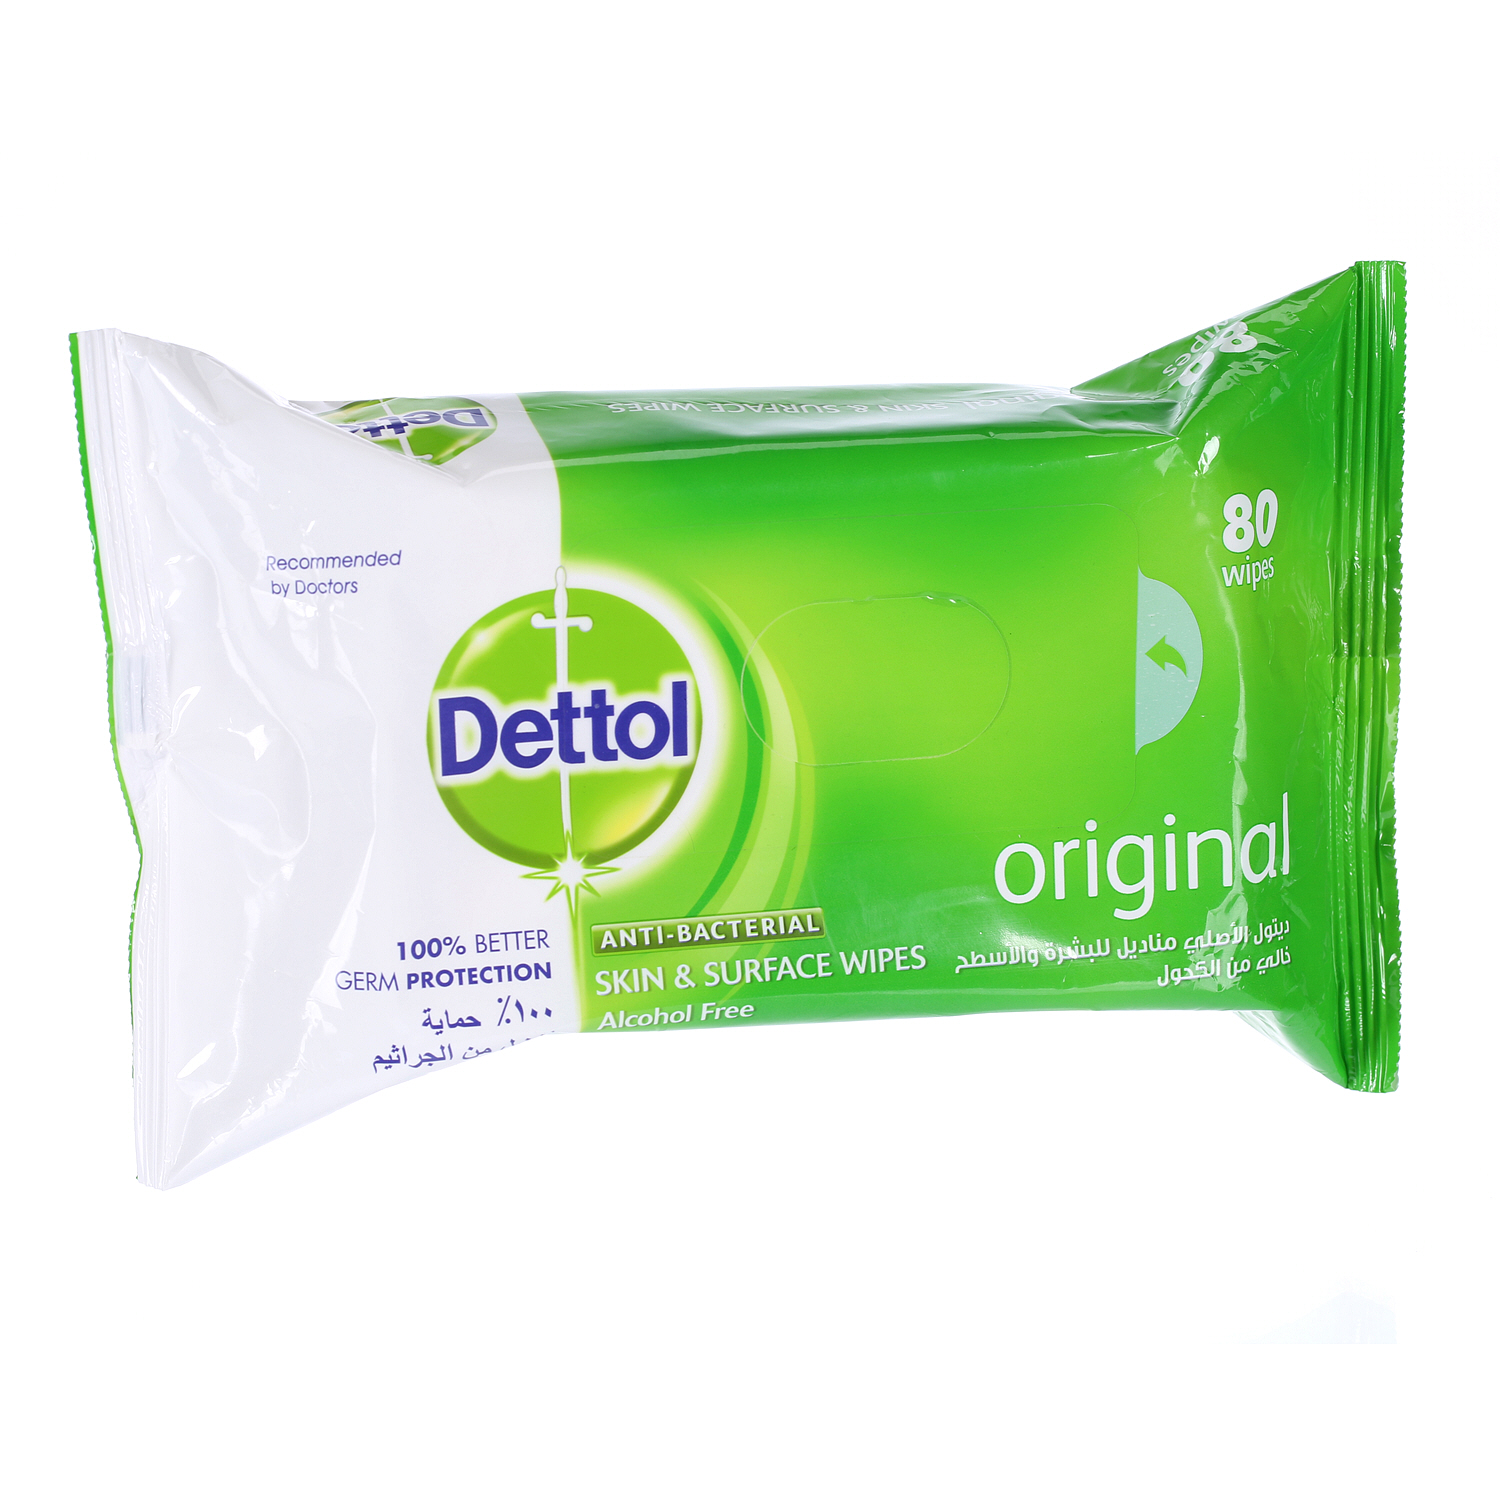 Dettol Antibacterial Wipes 80 Wipes